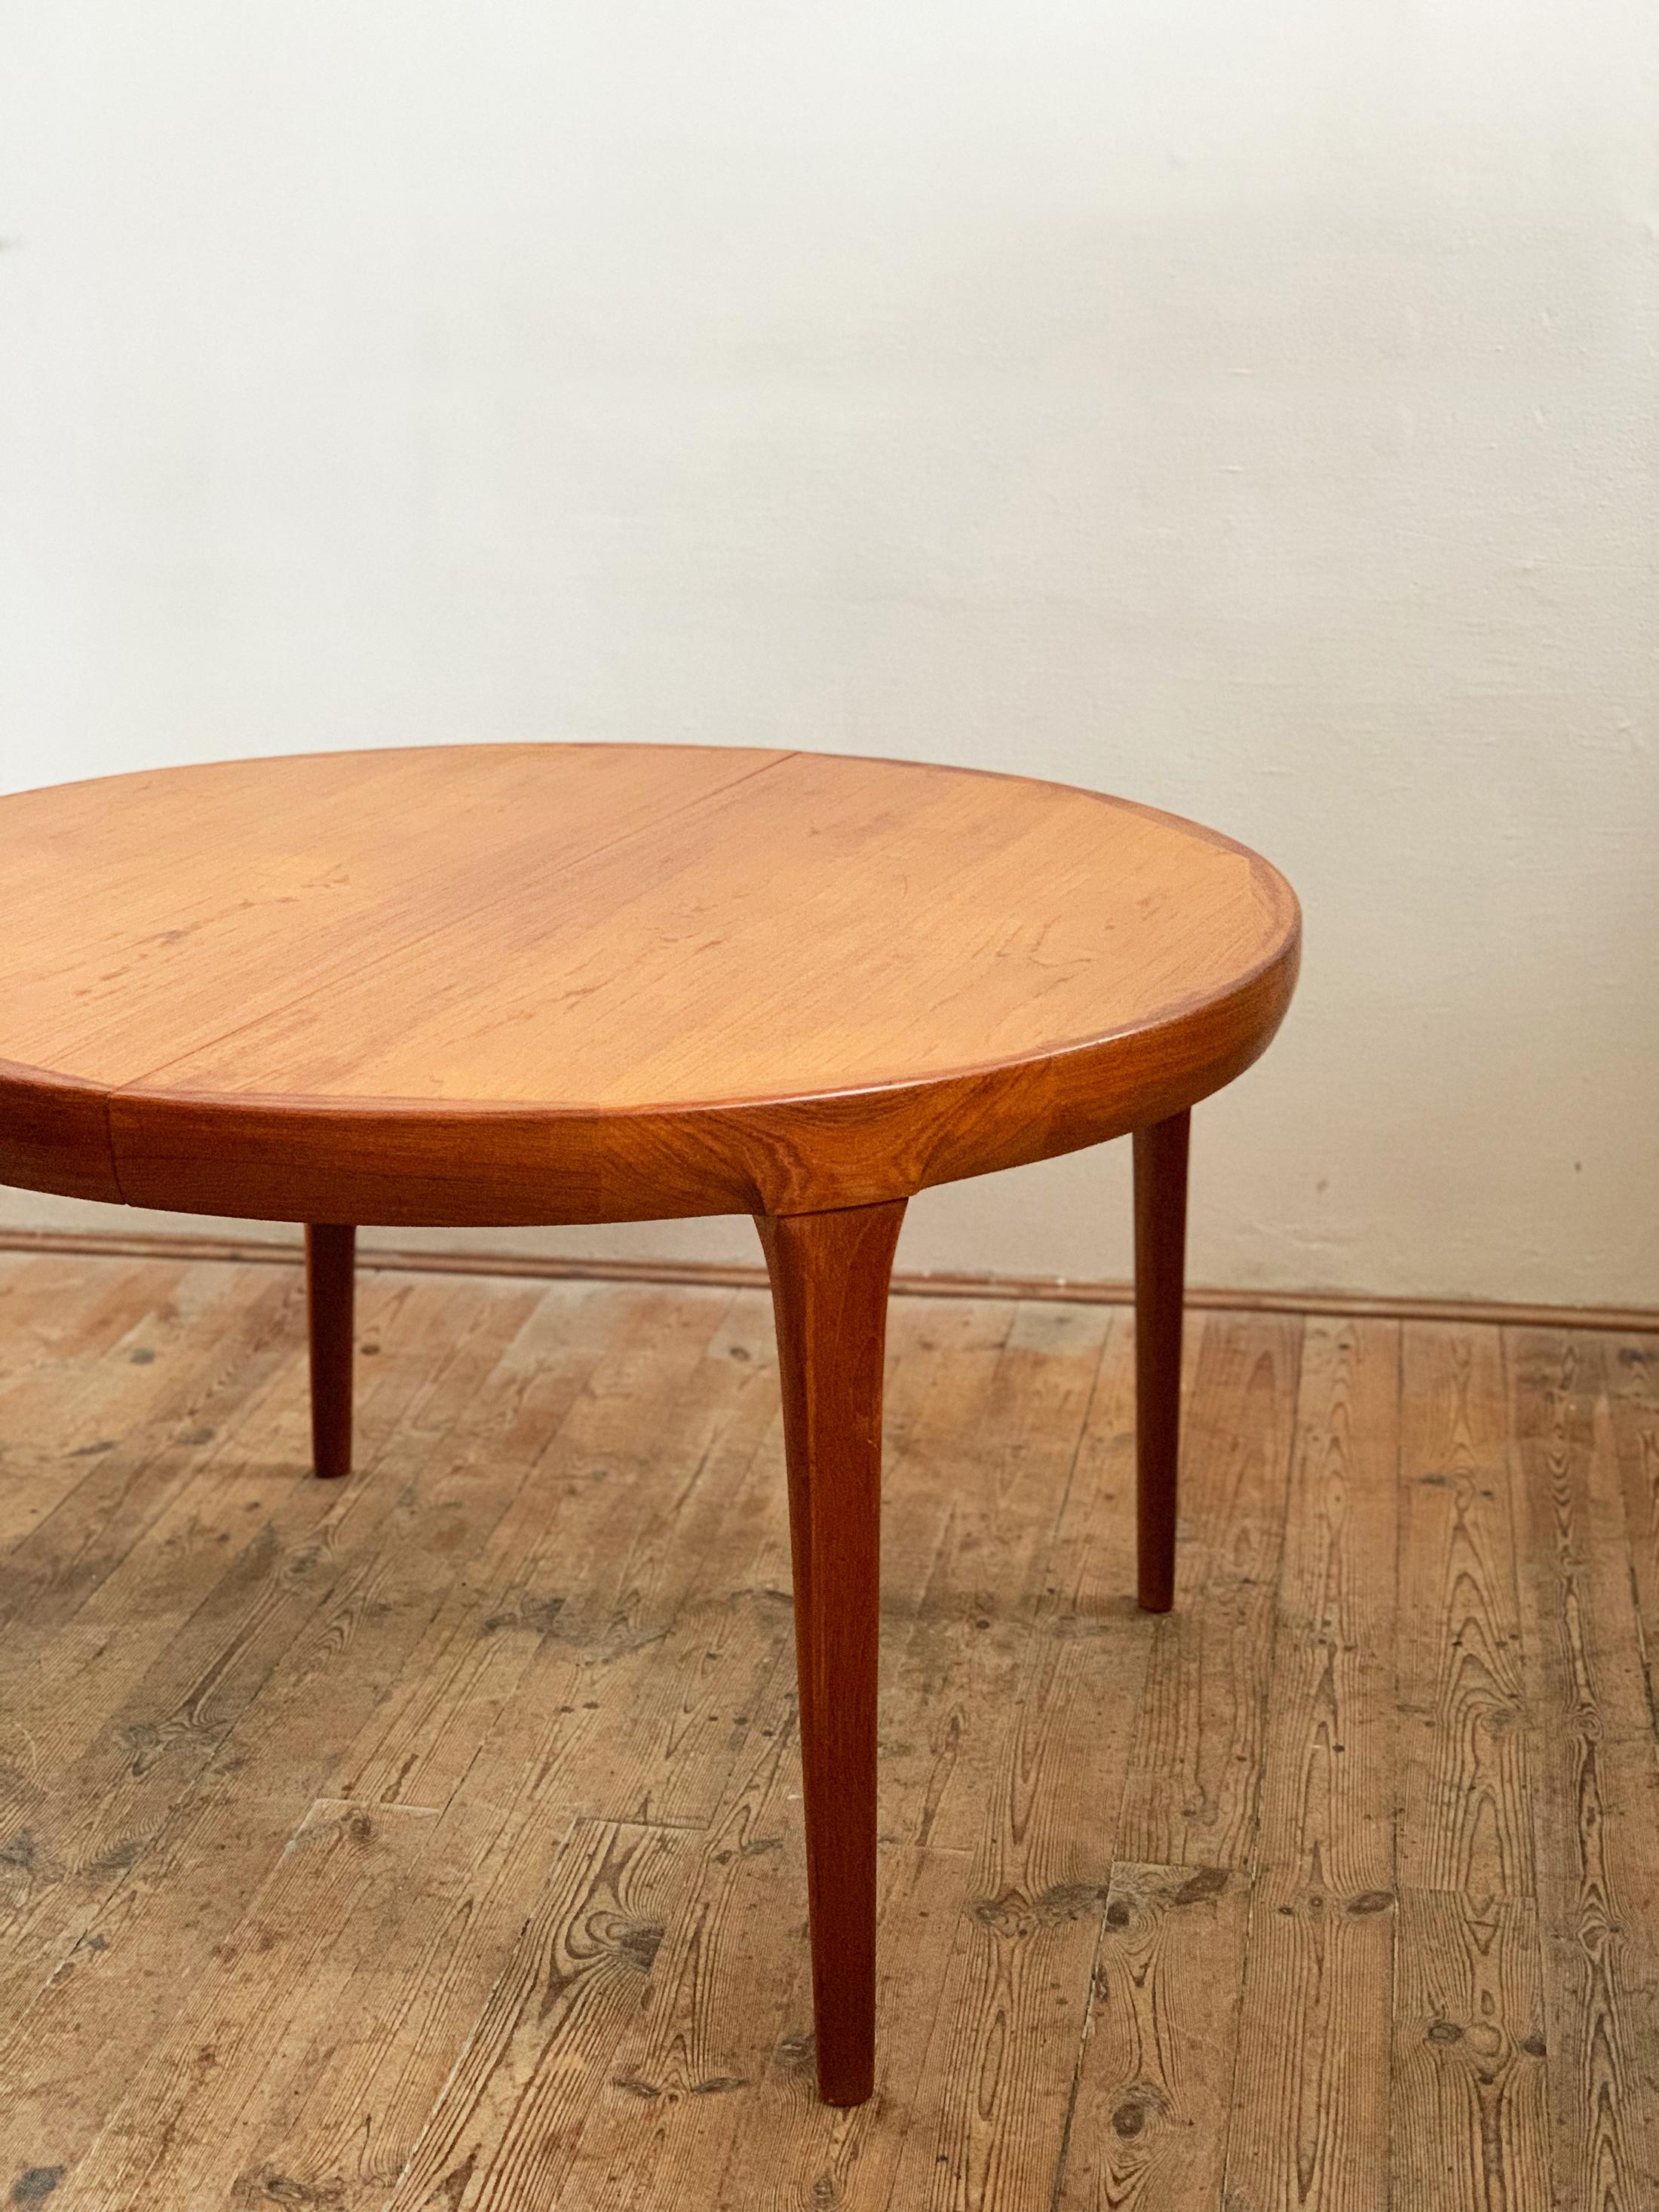 Danish Mid-Century Modern Extendable Teak Dining Table by Ib Kofod-Larsen, 1960s For Sale 9